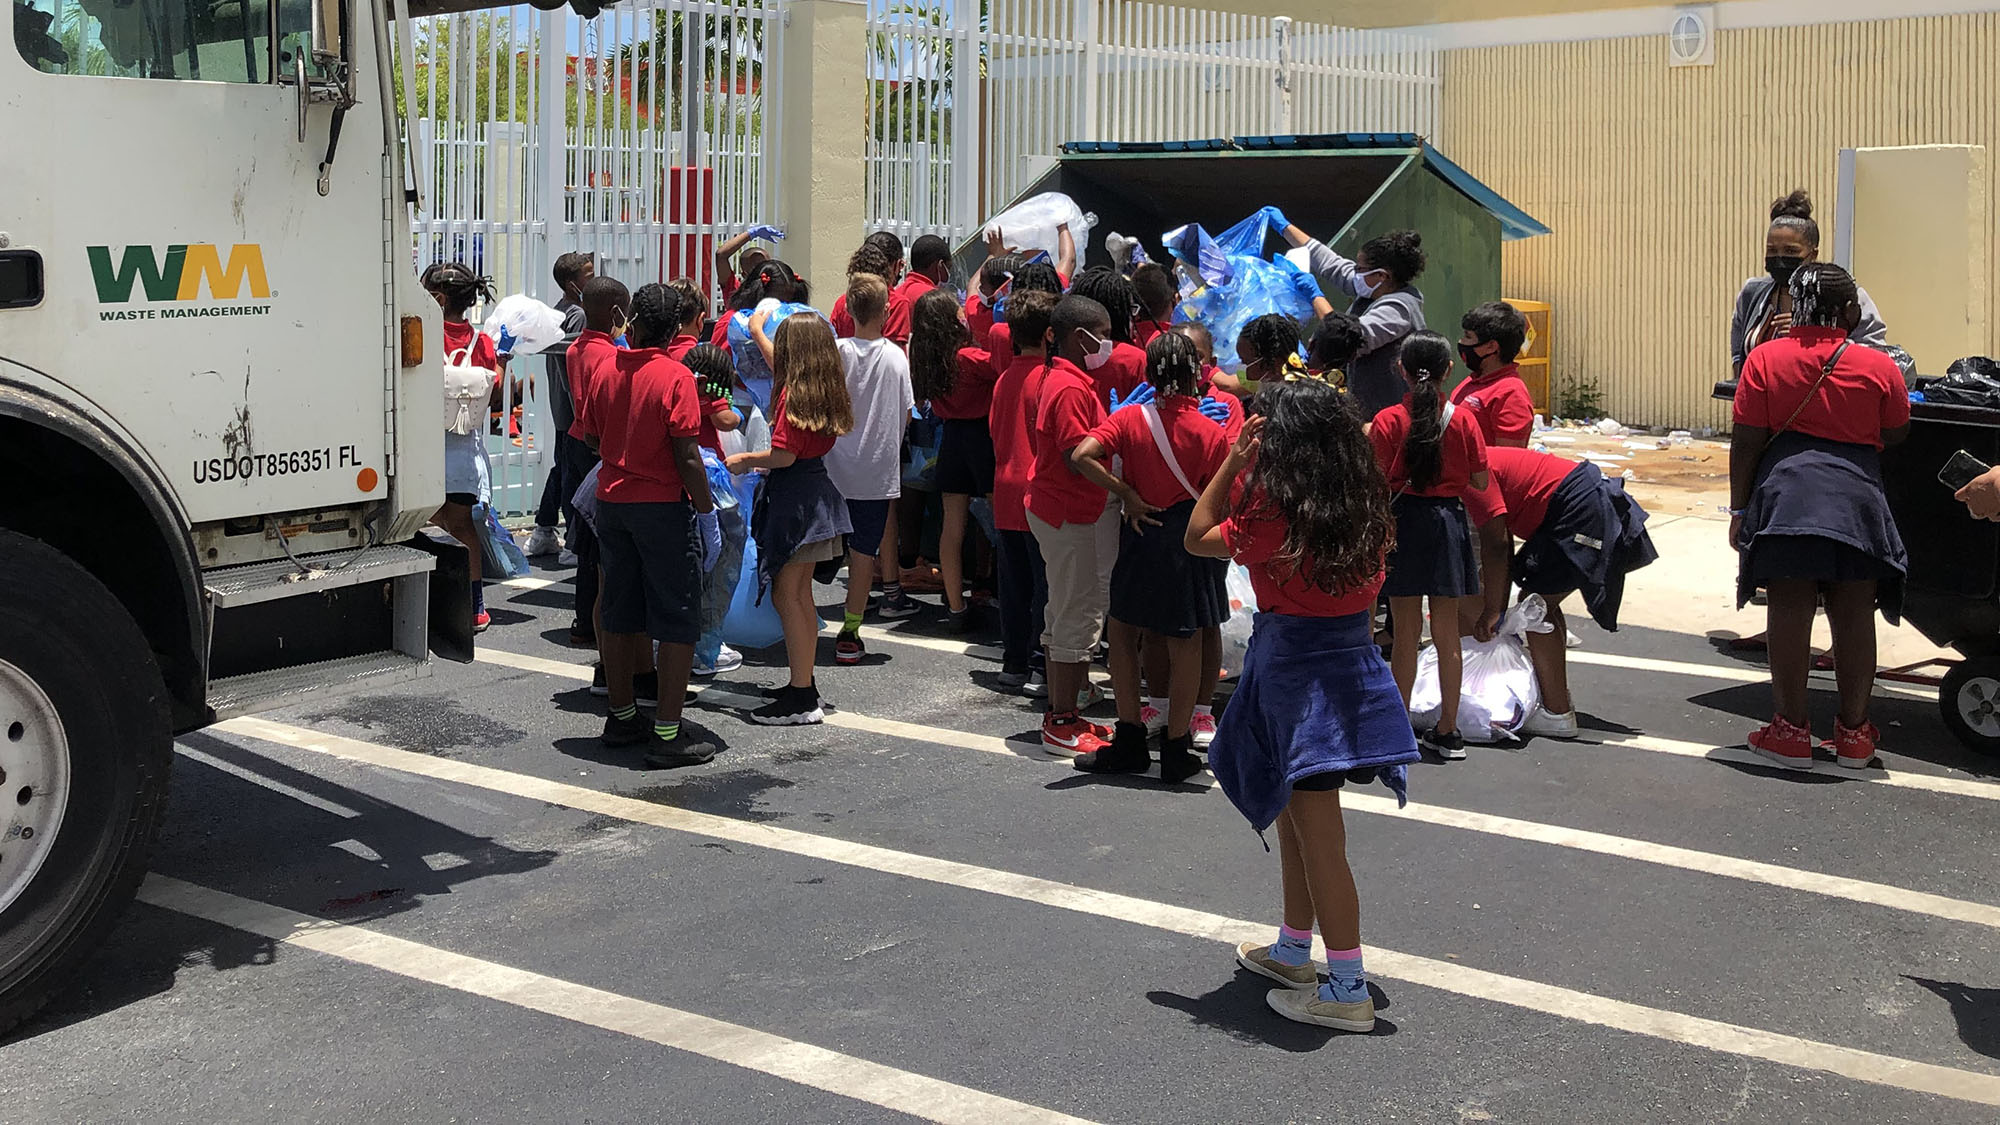 Renaissance Charter School in Tamarac Completes Recycle Challenge